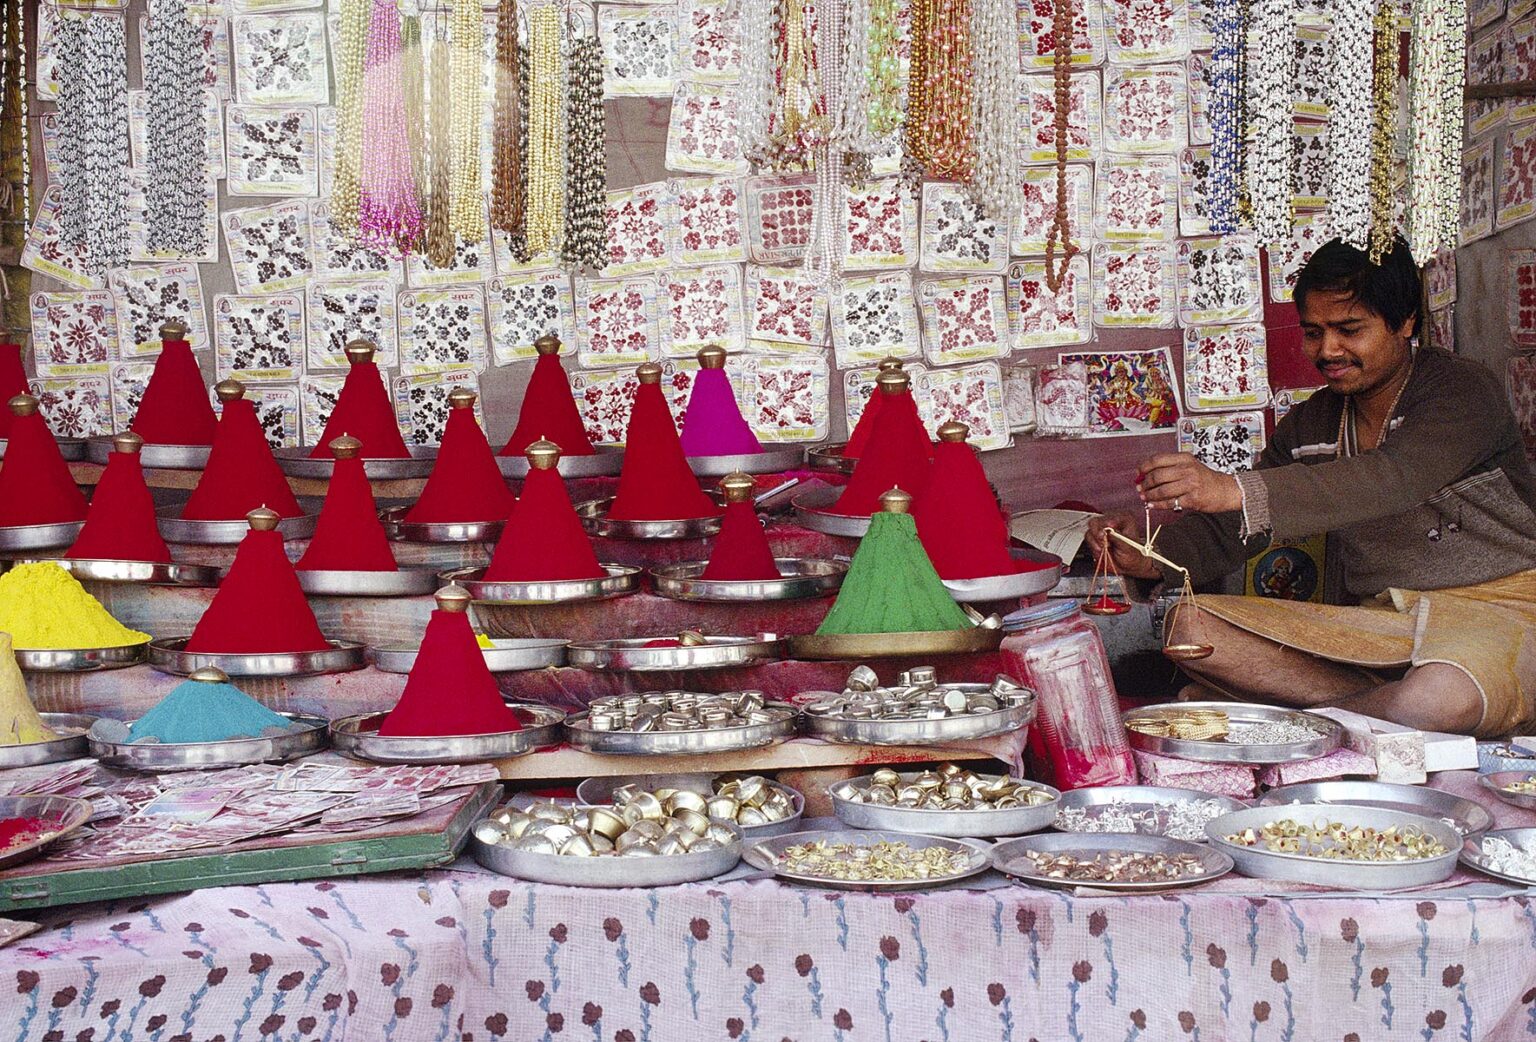 Piles of TIKKA (BLESSING) POWDER in a market stall at the PUSHKAR CAMEL FAIR - RAJASTHAN, INDIA